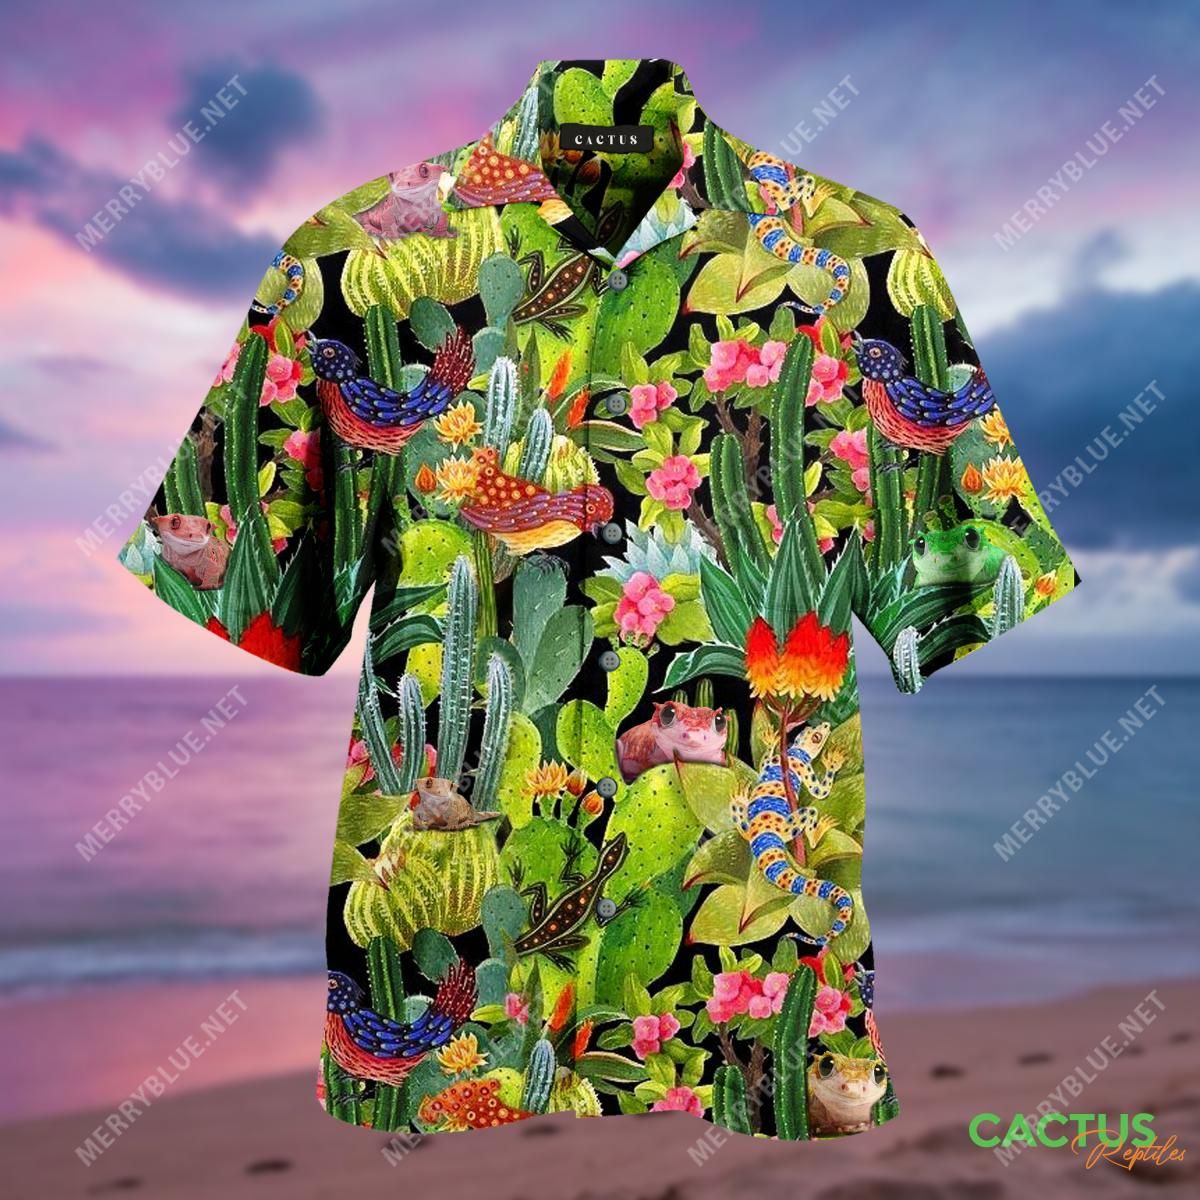 Amazing Cactus And Reptiles Aloha Hawaiian Shirt Colorful Short Sleeve Summer Beach Casual Shirt For Men And Women